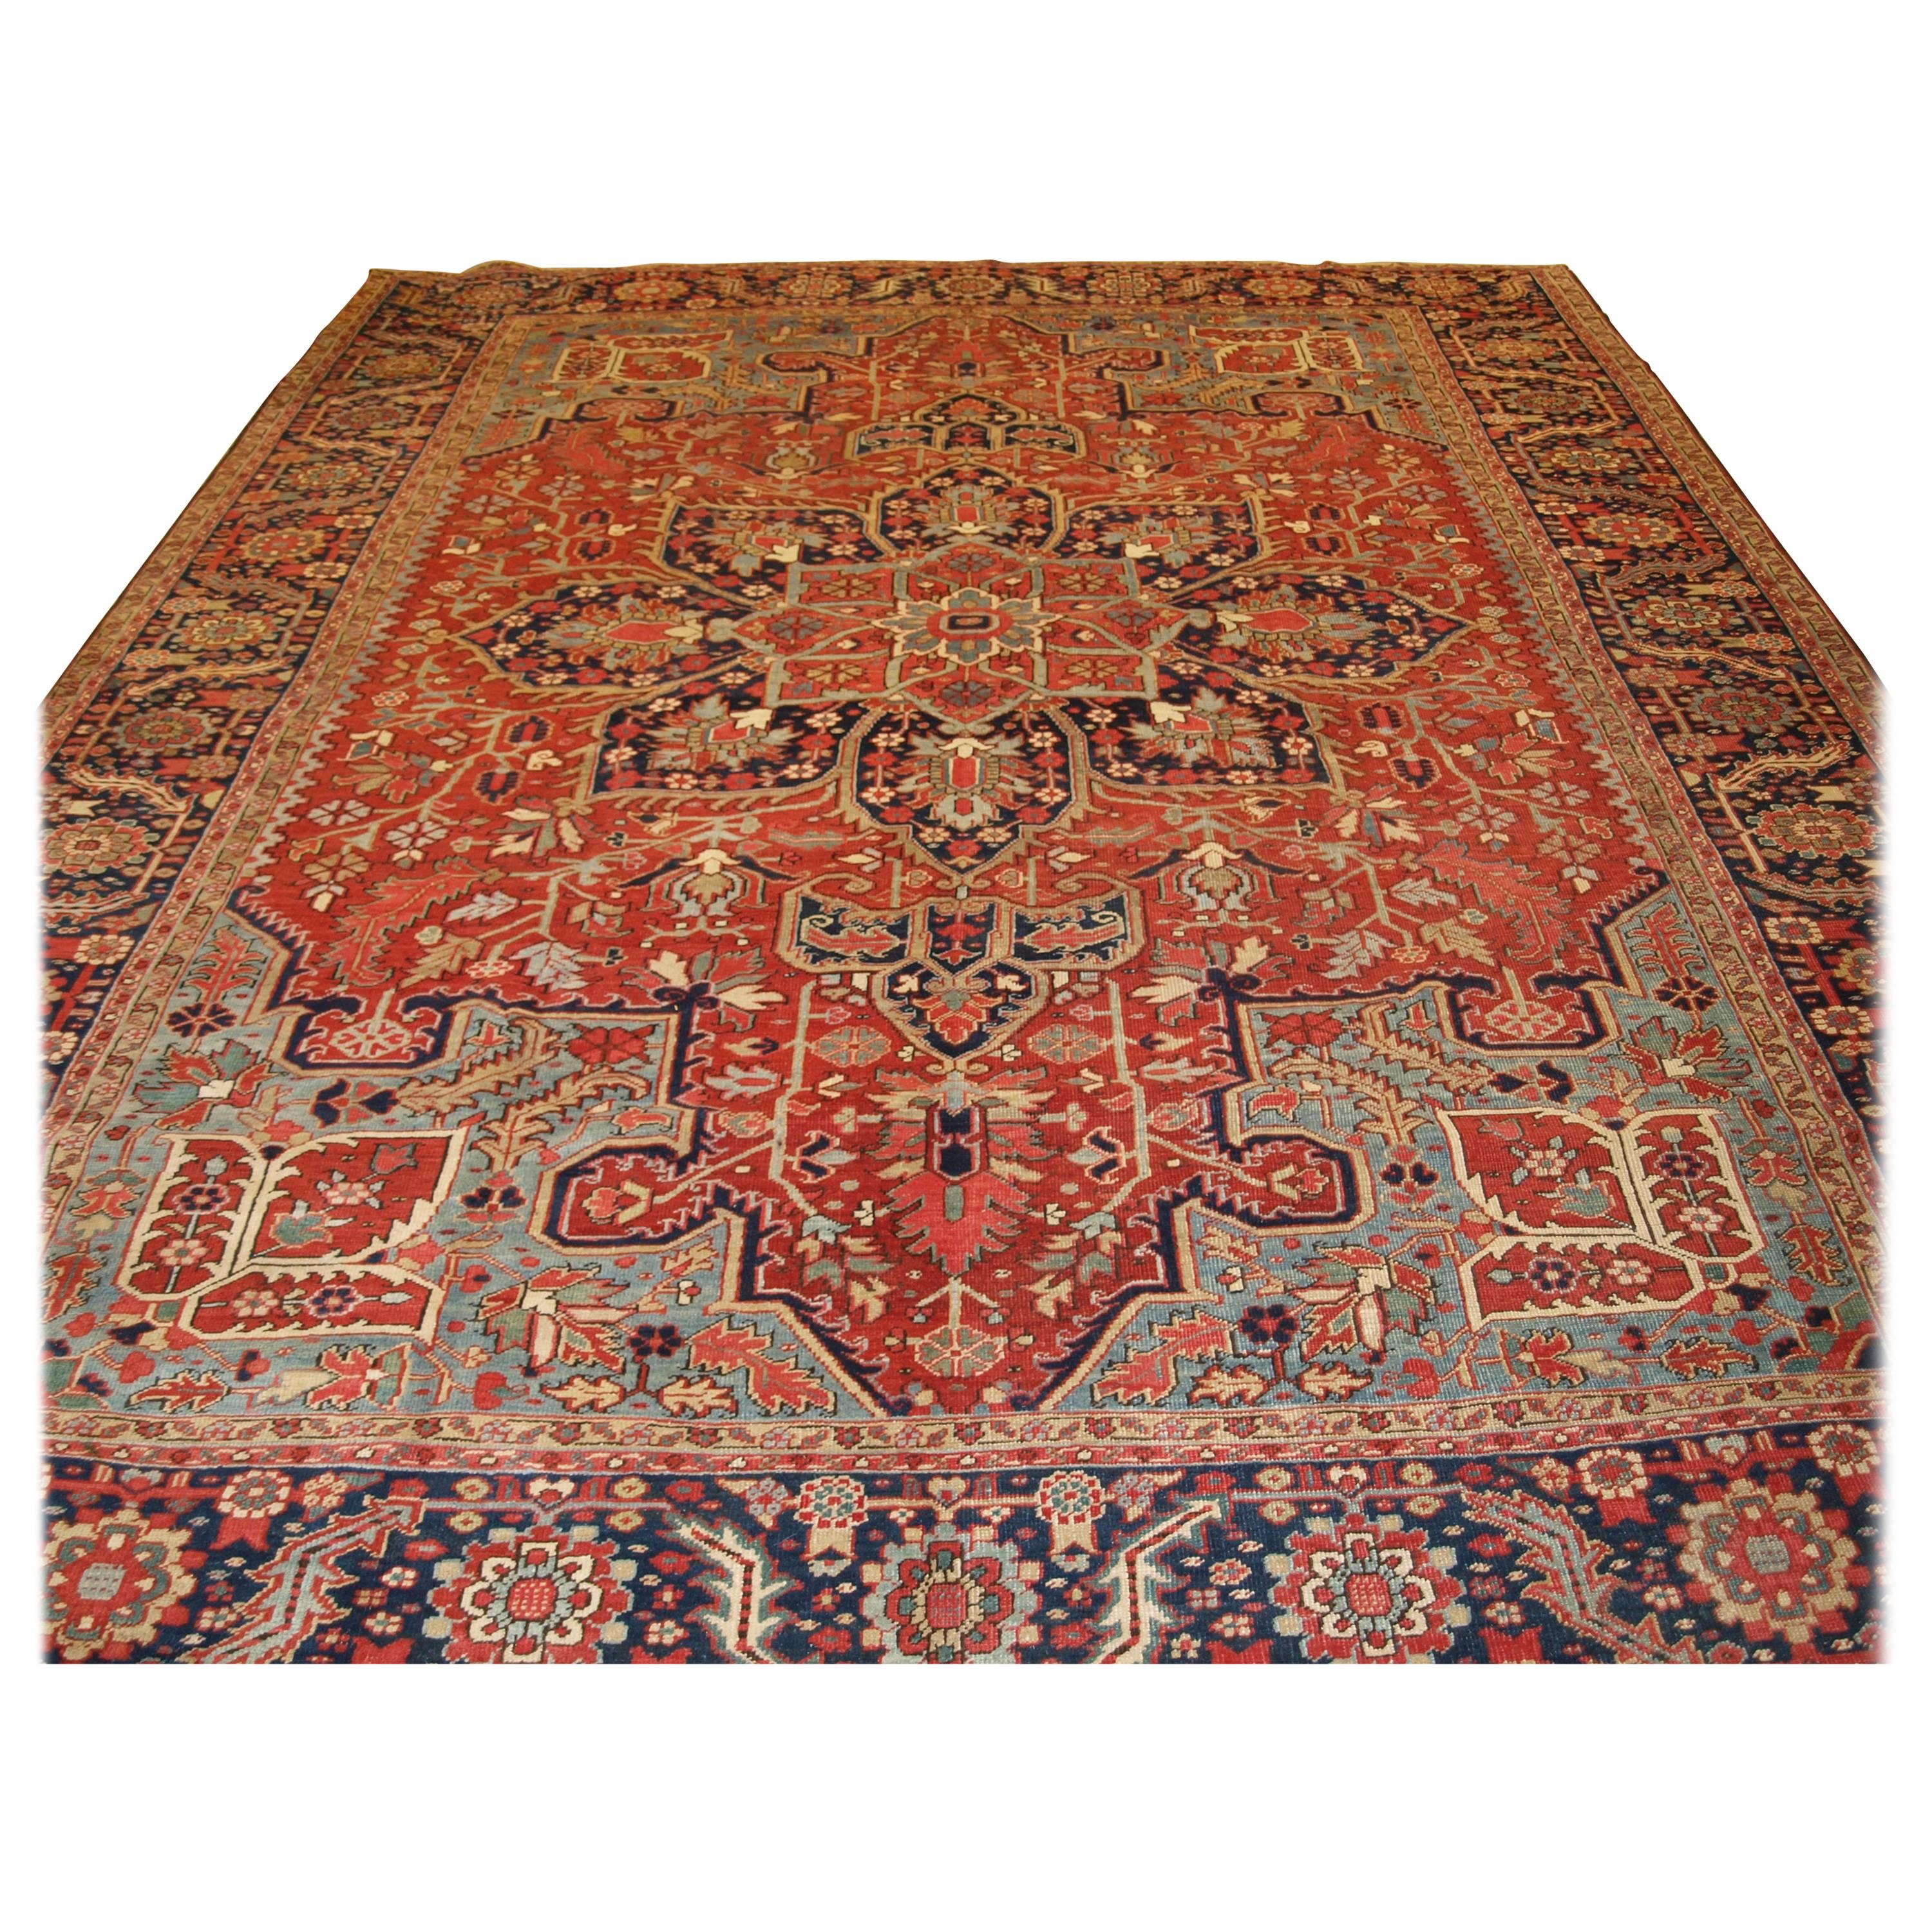 Antique Persian Heriz Carpet, Soft Reds and Light Blues